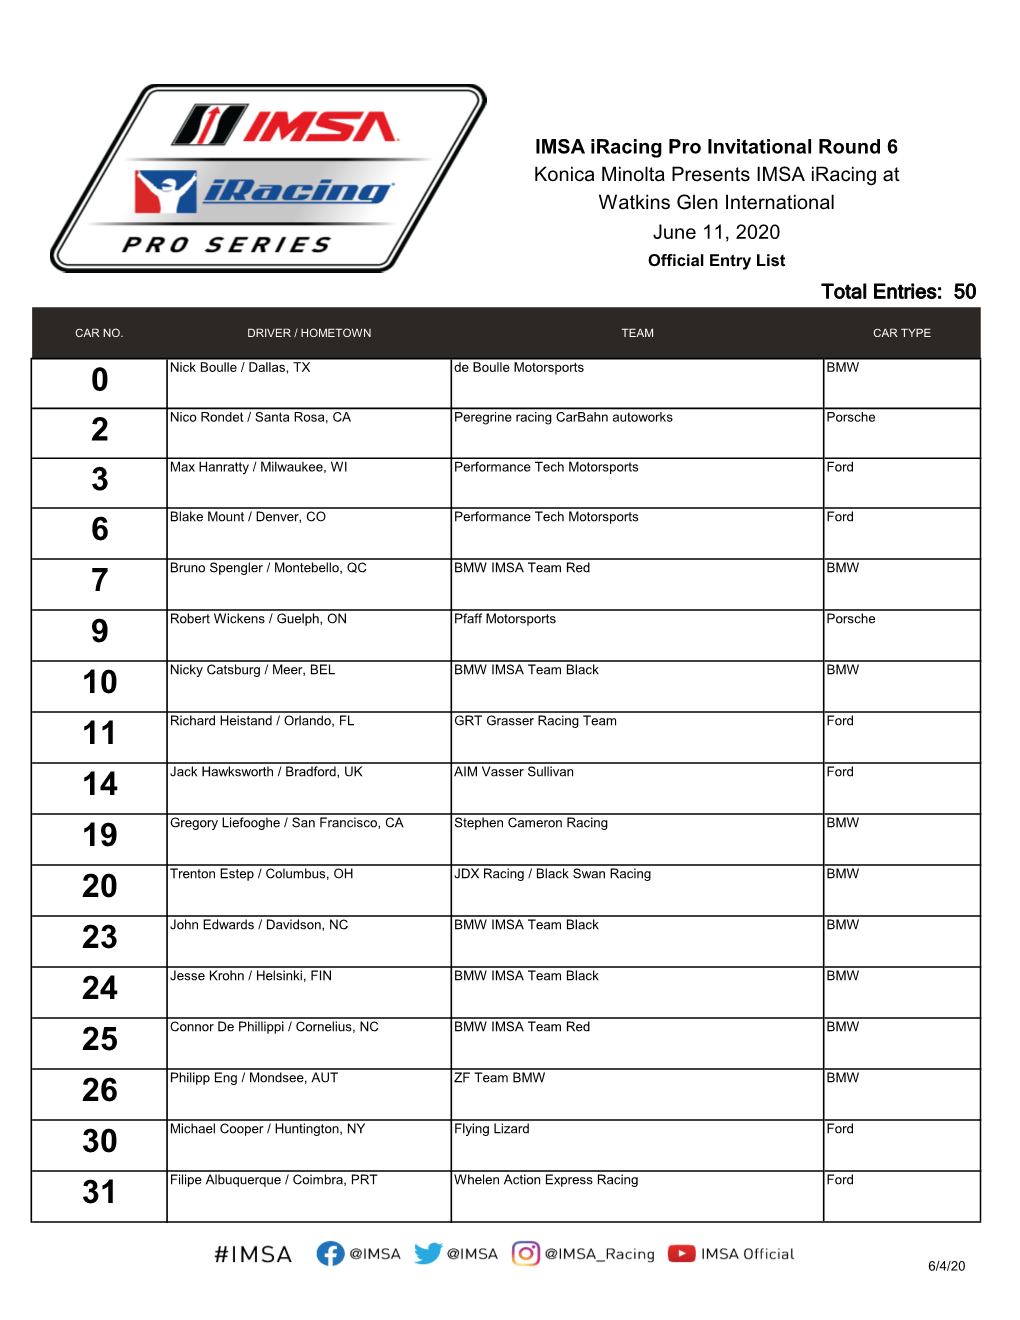 Entry List- Konica Minolta Presents IMSA Iracing at Watkins Glen